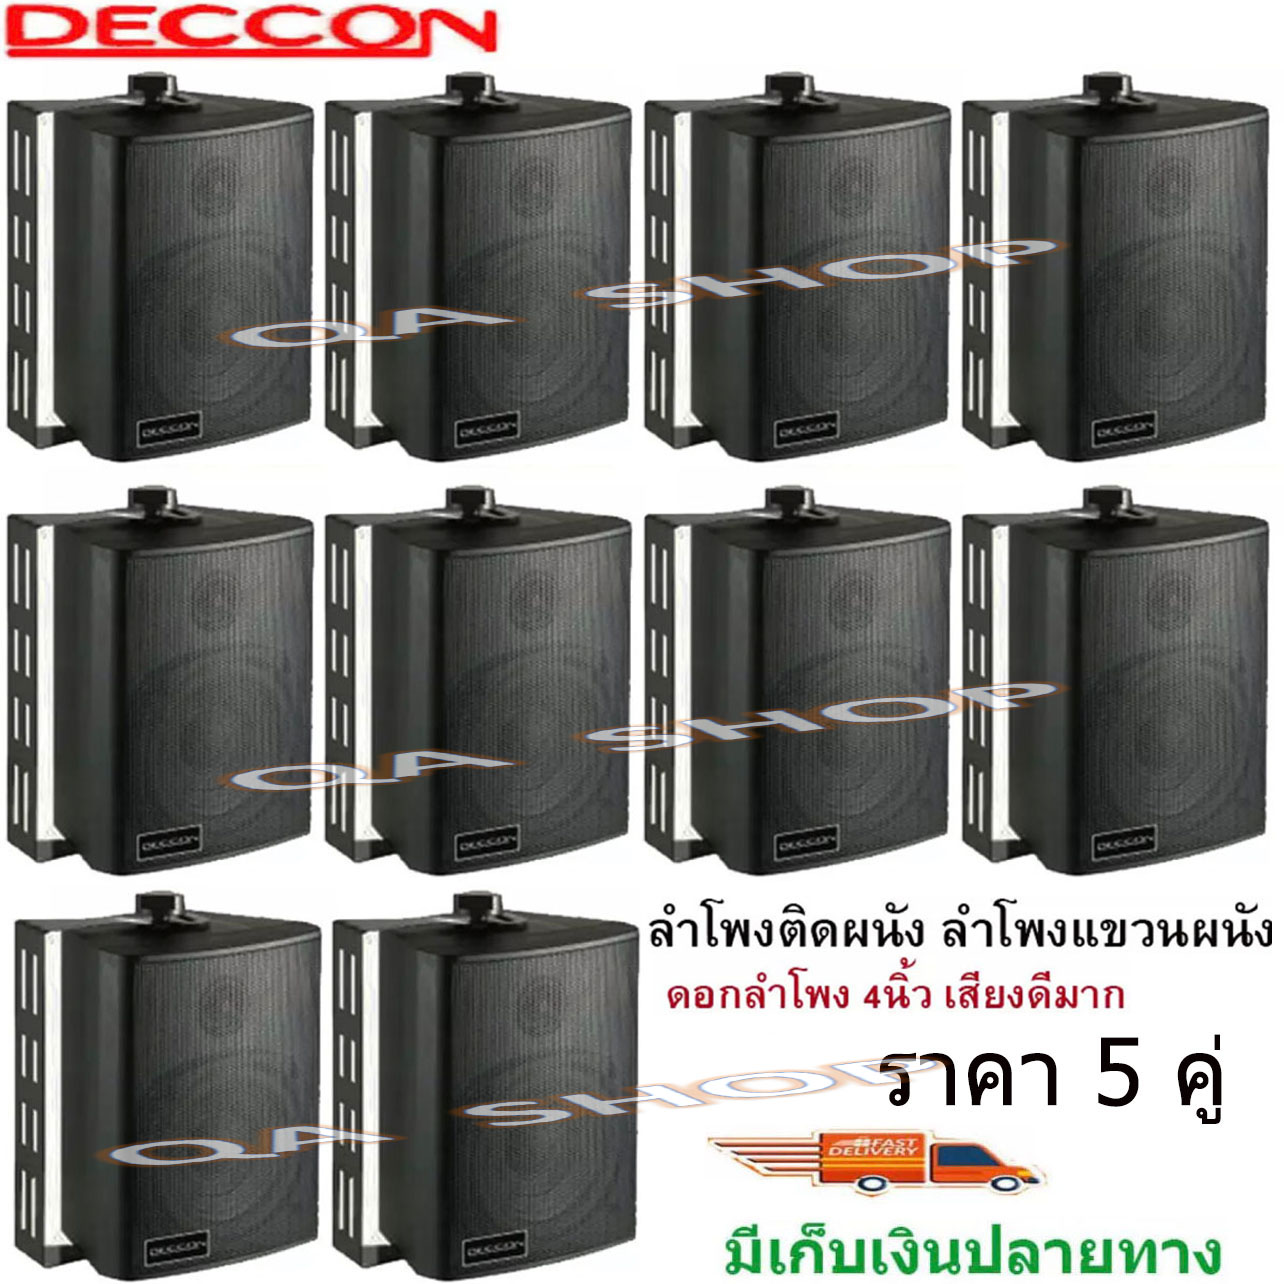 DECCON ตู้ลำโพงพลาสติก ลำโพงติดผนัง ลำโพงแขวน ตู้พร้อมลำโพง 4นิ้ว มีขาแขวน300วัตต์รุ่น ZIN-4 (สีดำ)